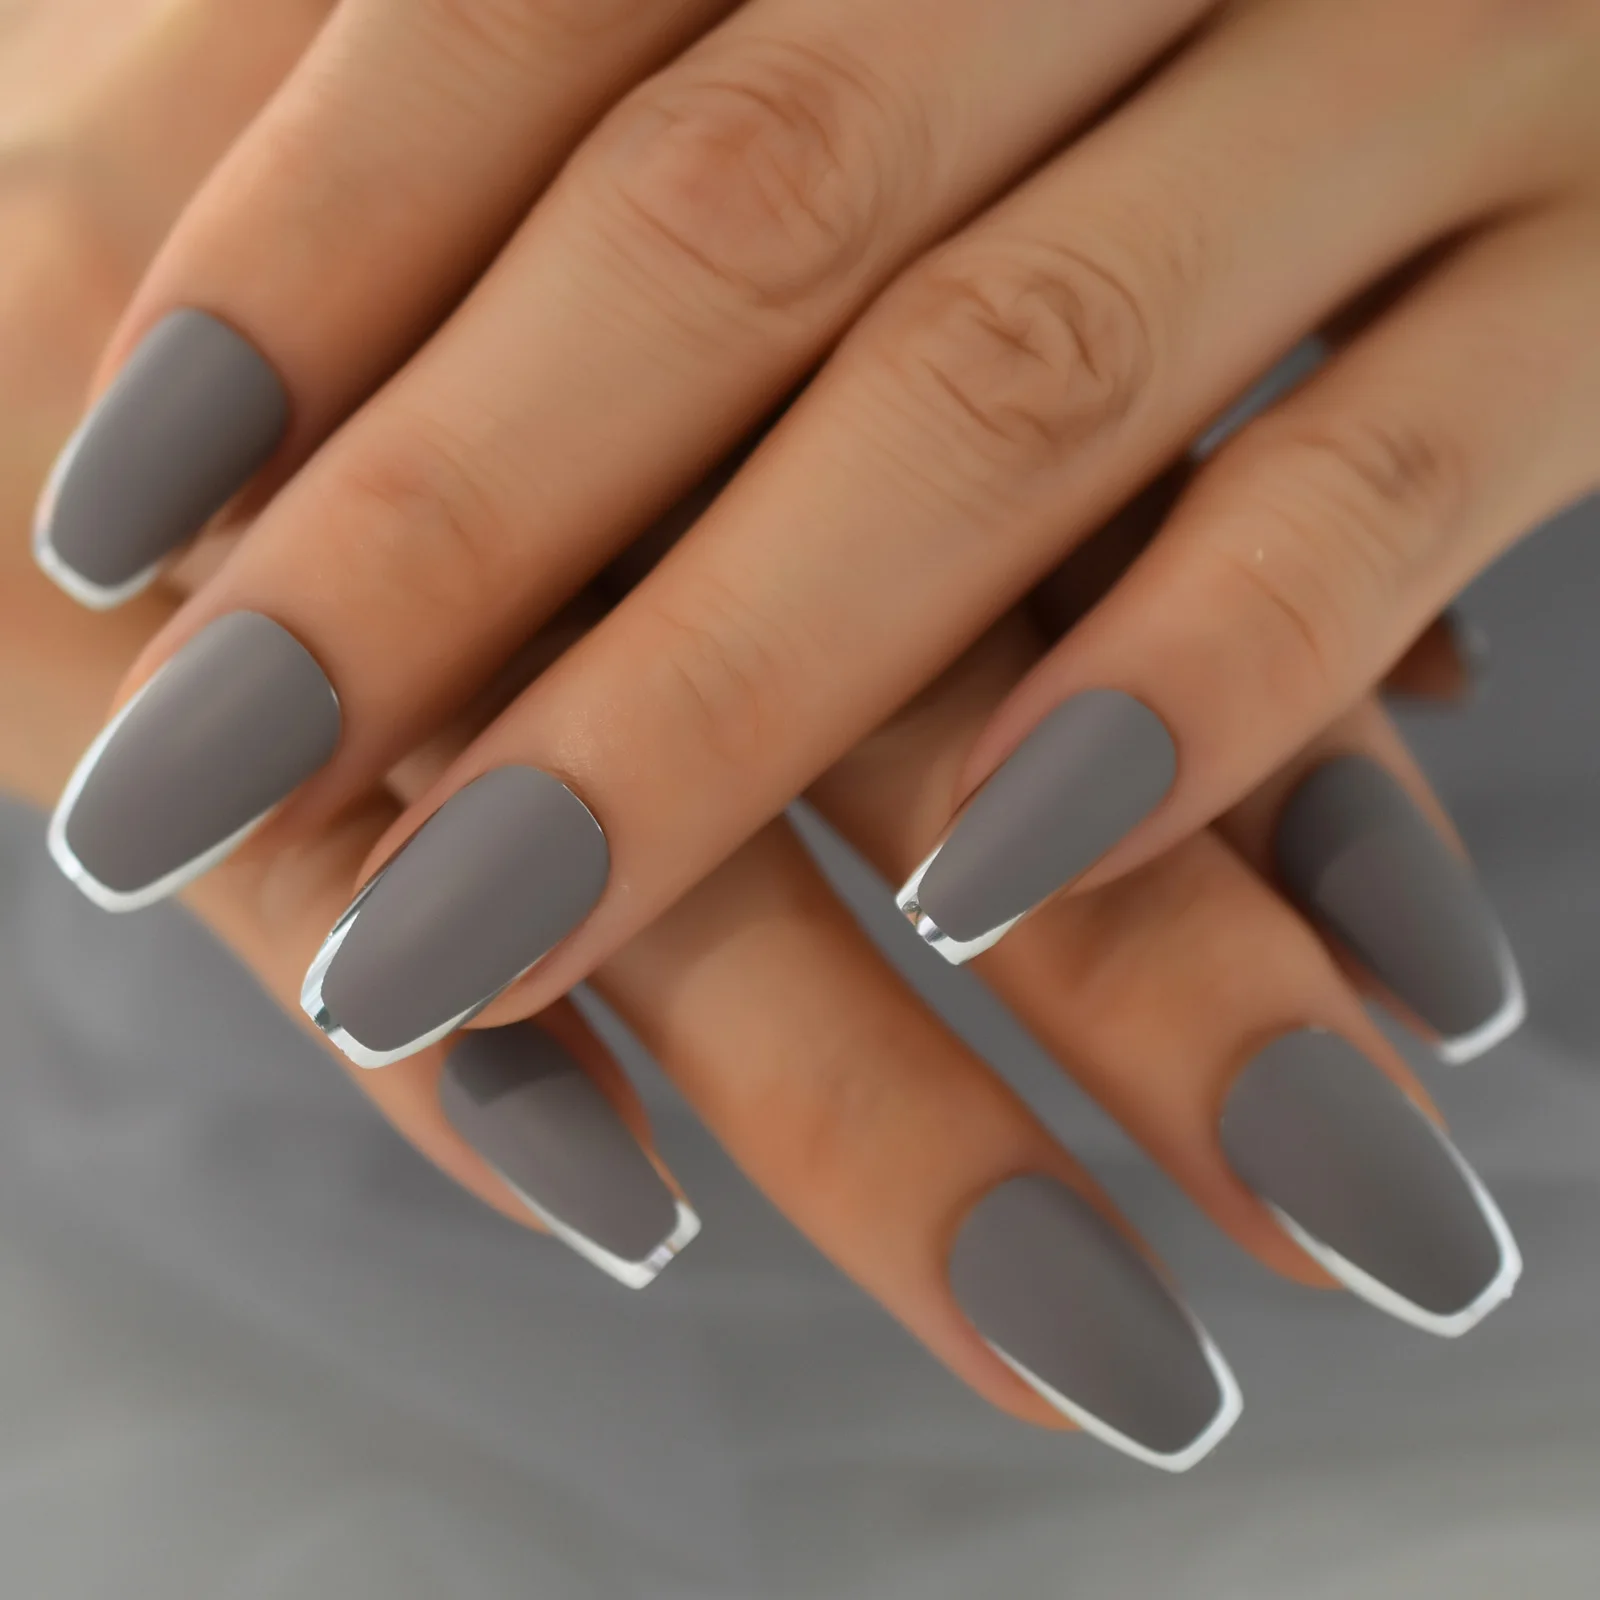 Fake False Nails Designer Silver U Matte Coffin Nail Tips Press Ons Medium Length Artificial Manicure Art For Laides Fingernails images - 6